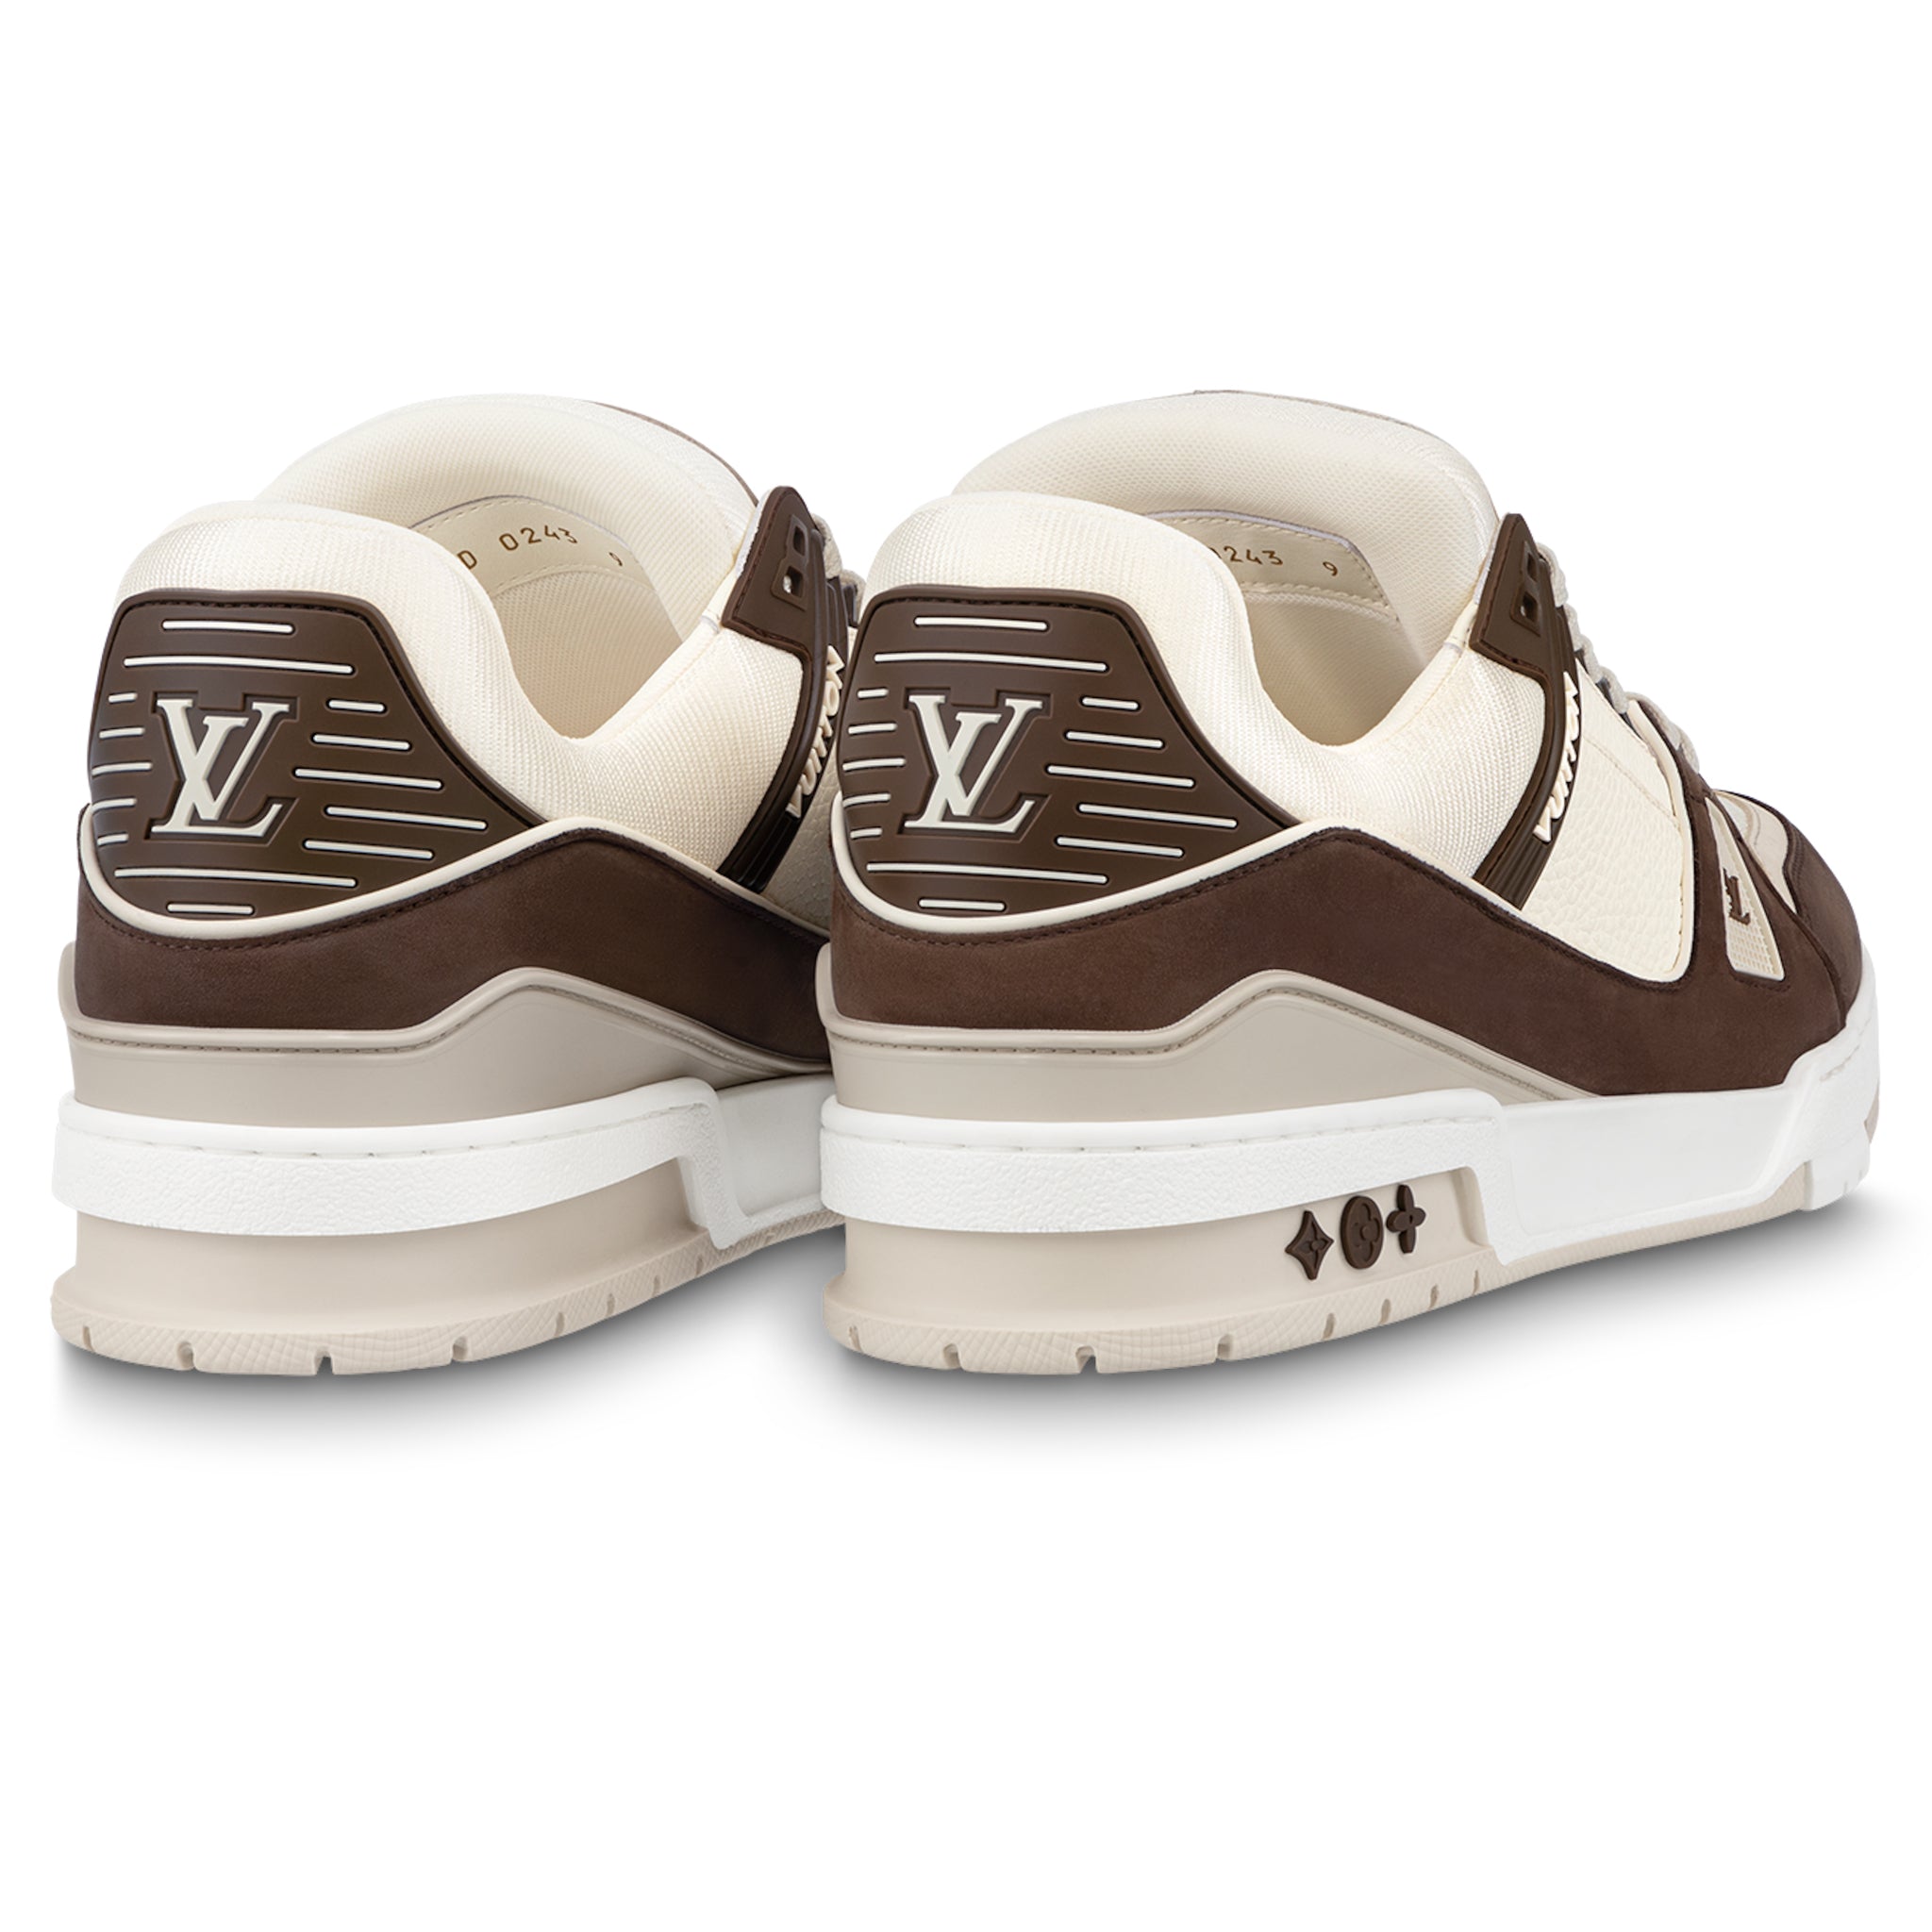 Back side view of Louis Vuitton LV Trainer Calf Leather Moka Sneaker NVPROD4280067V